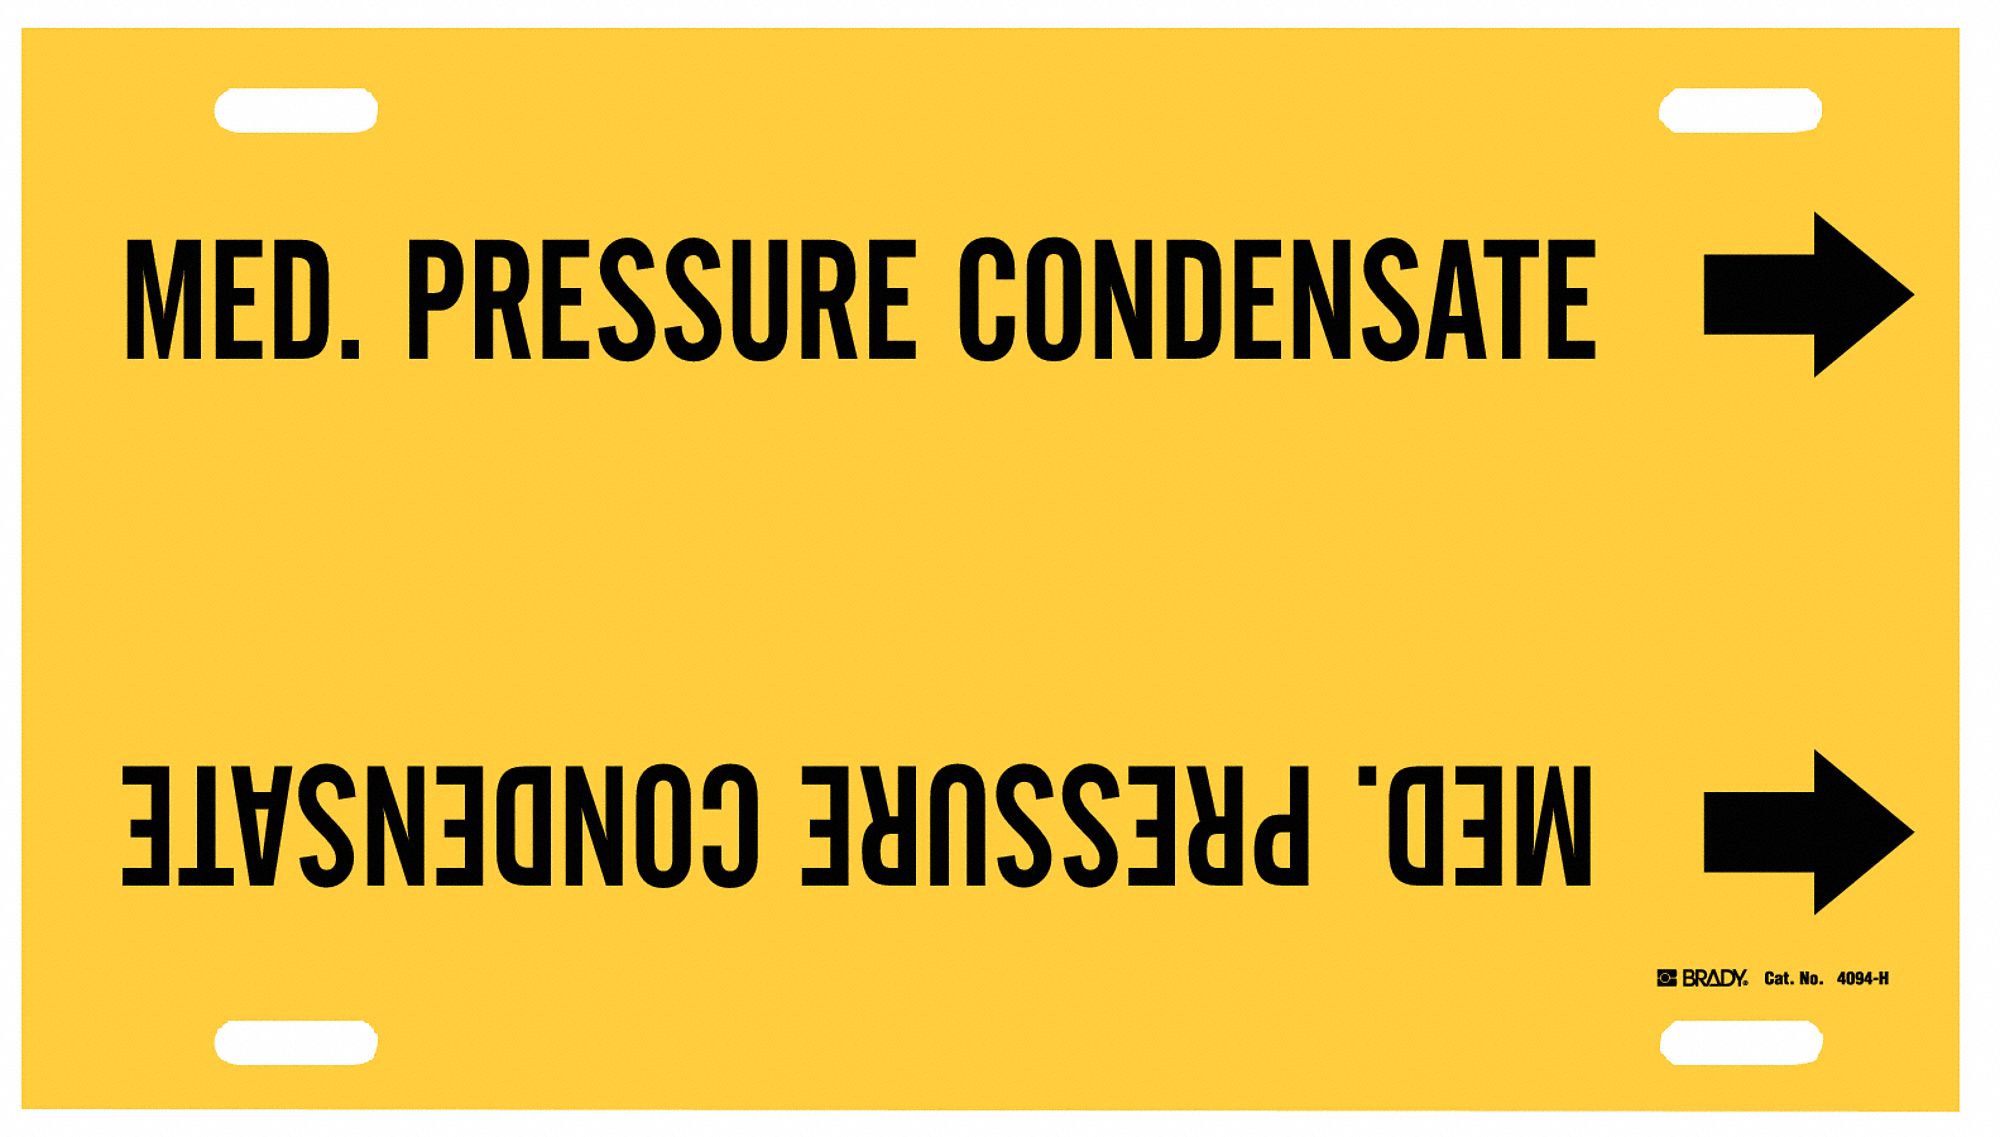 Pipe Mkr,Med. Pressure Condensate,10to15